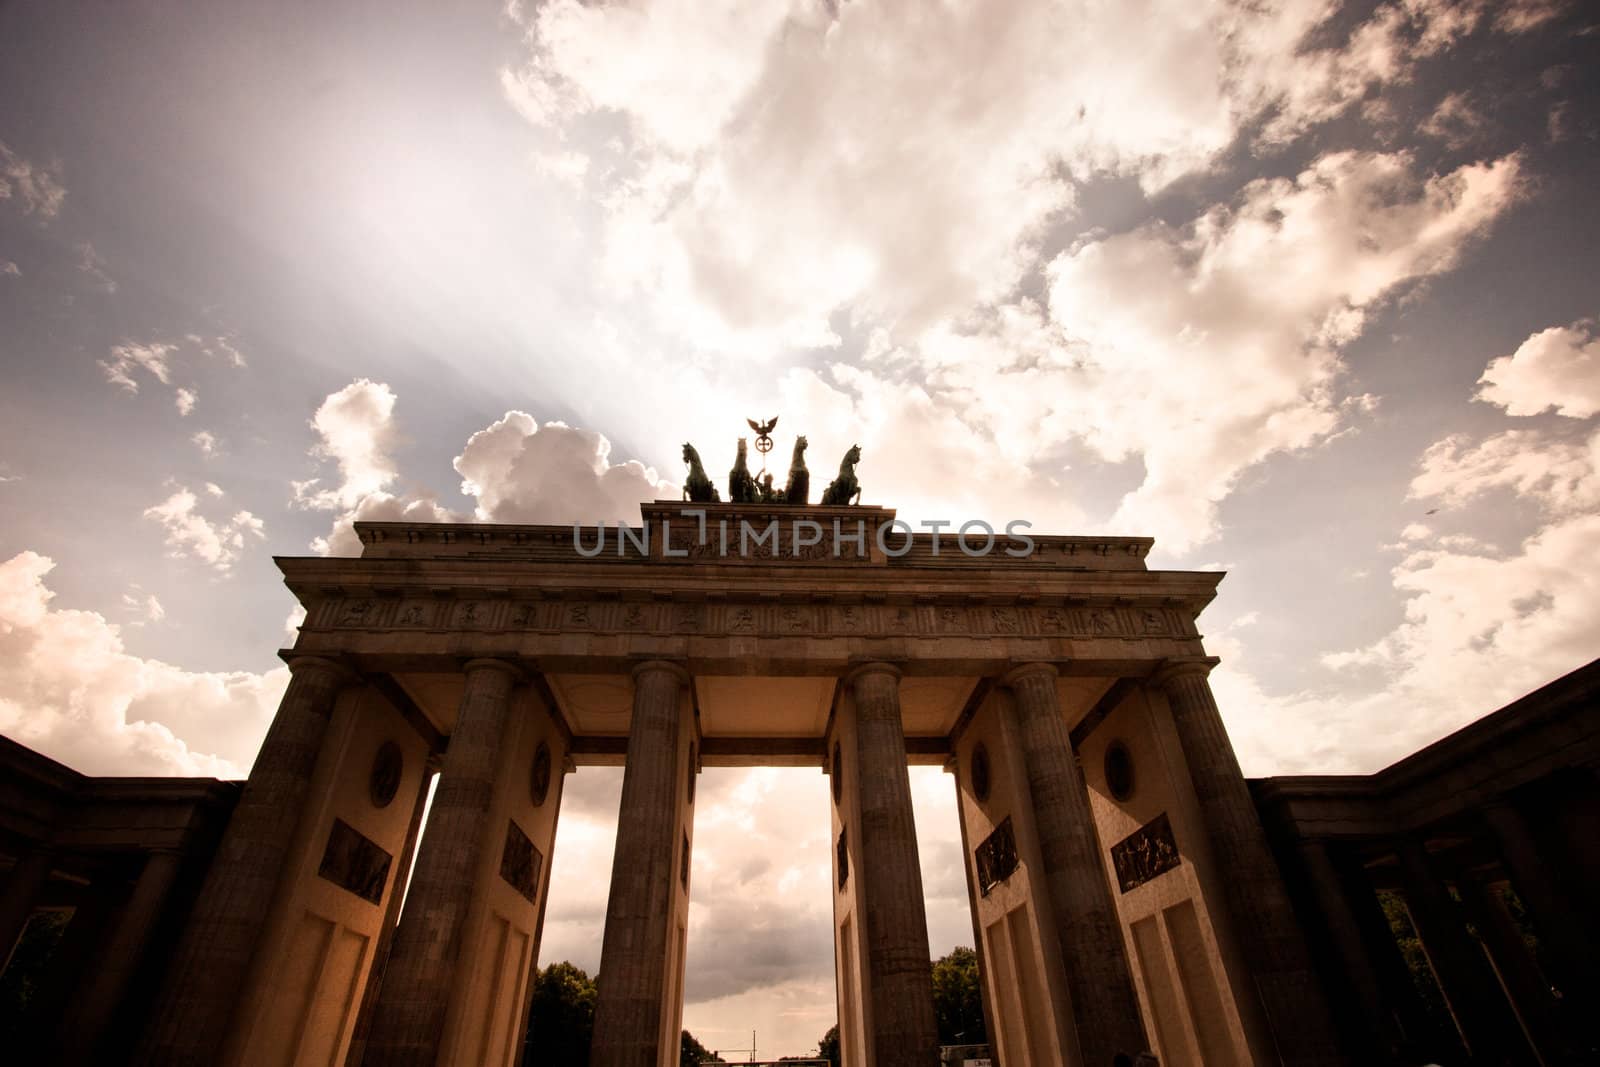 Brandenburg Gate against a dramatic sky by jrstock